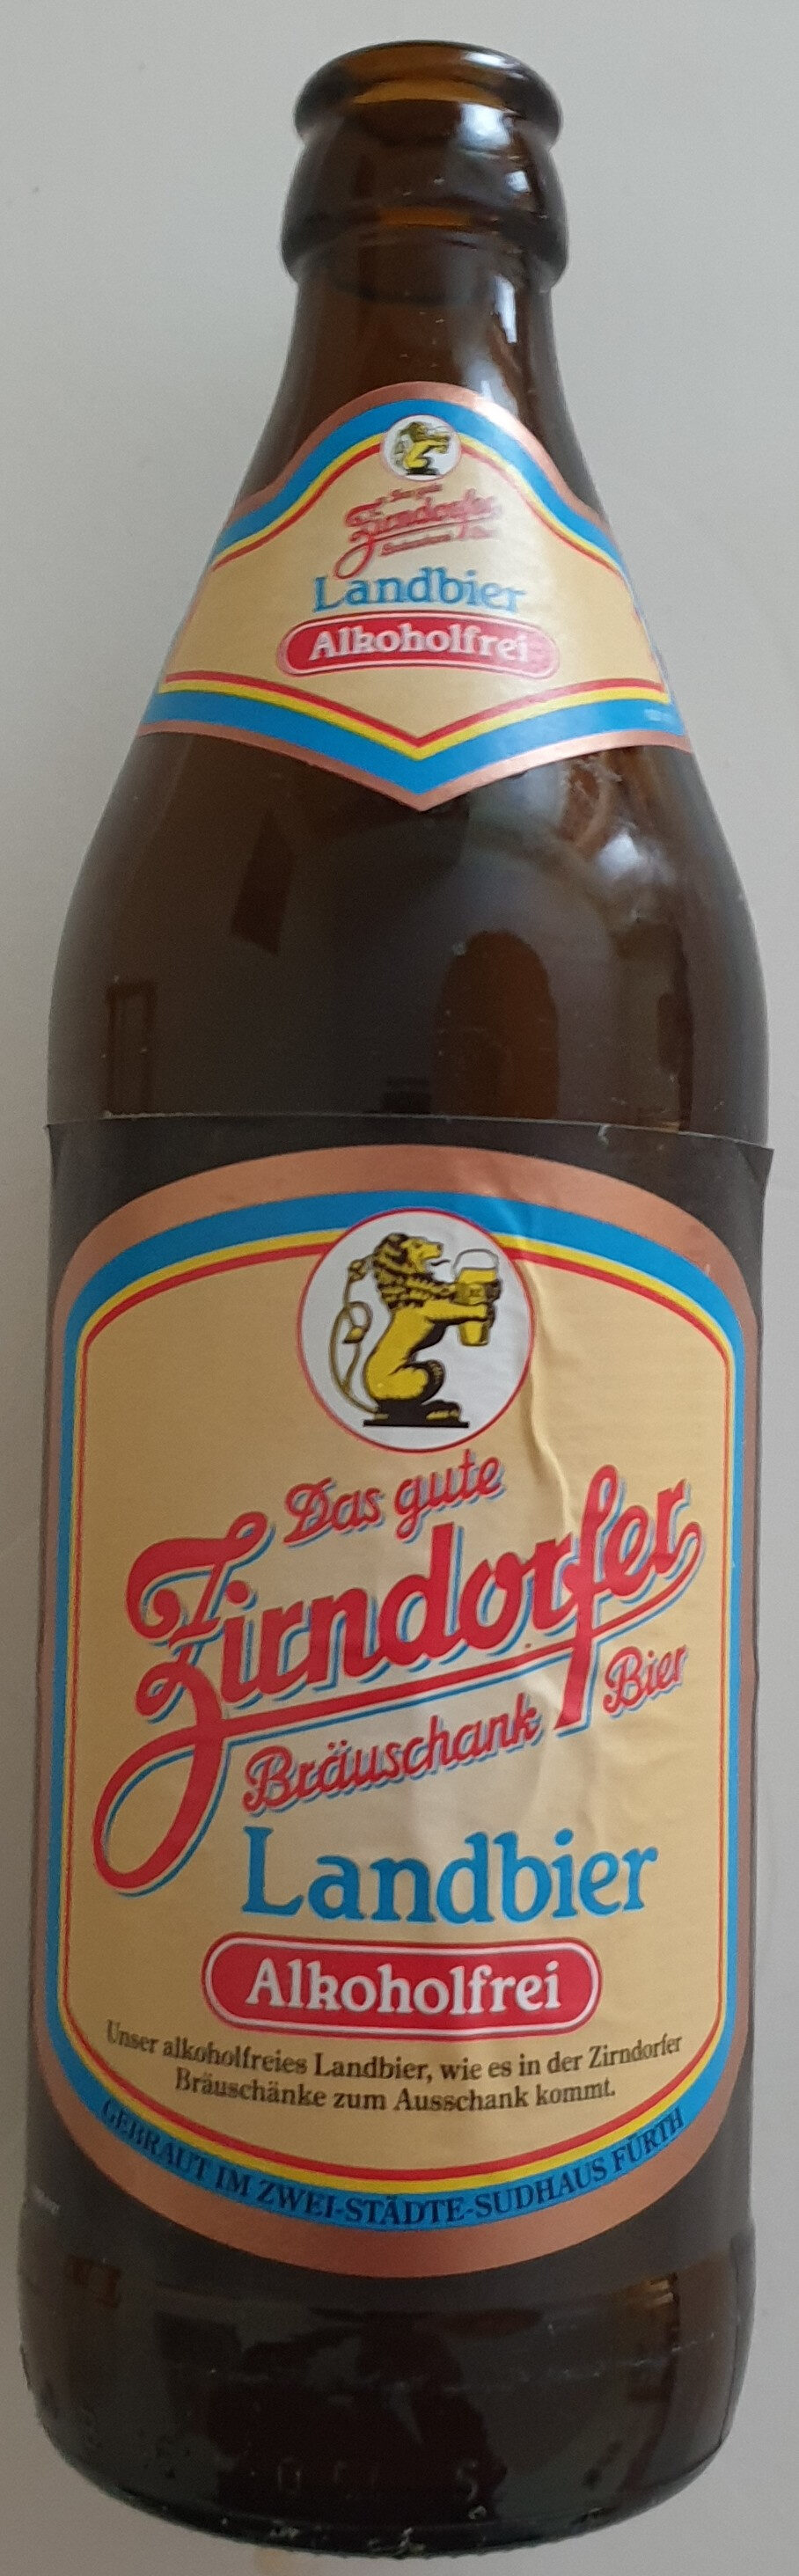 Das gute Zirndorfer Landbier alkoholfrei - Producto - de